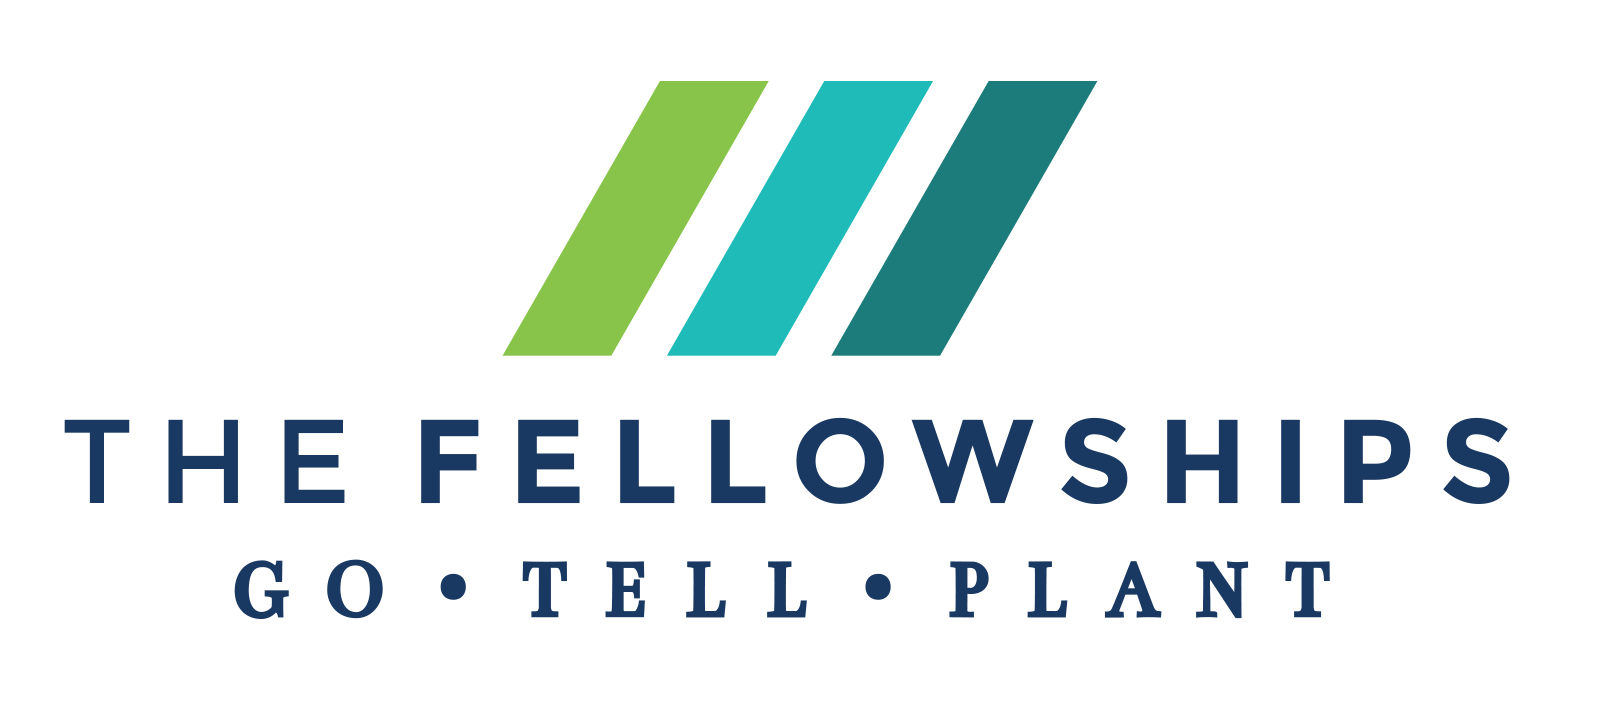 Fellowships Network GTA